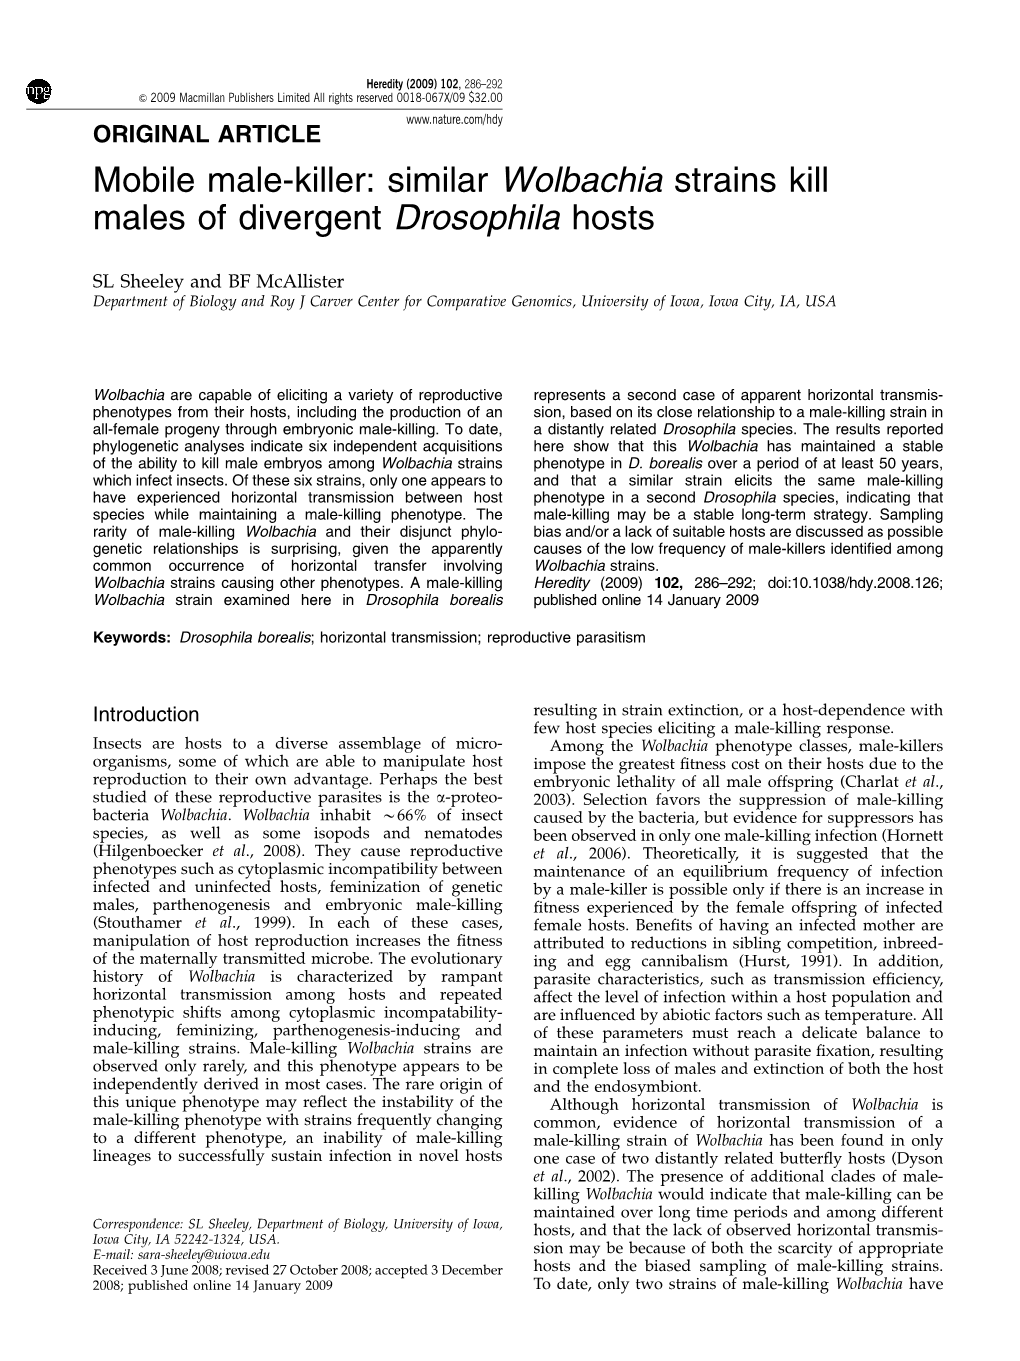 Similar Wolbachia Strains Kill Males of Divergent Drosophila Hosts